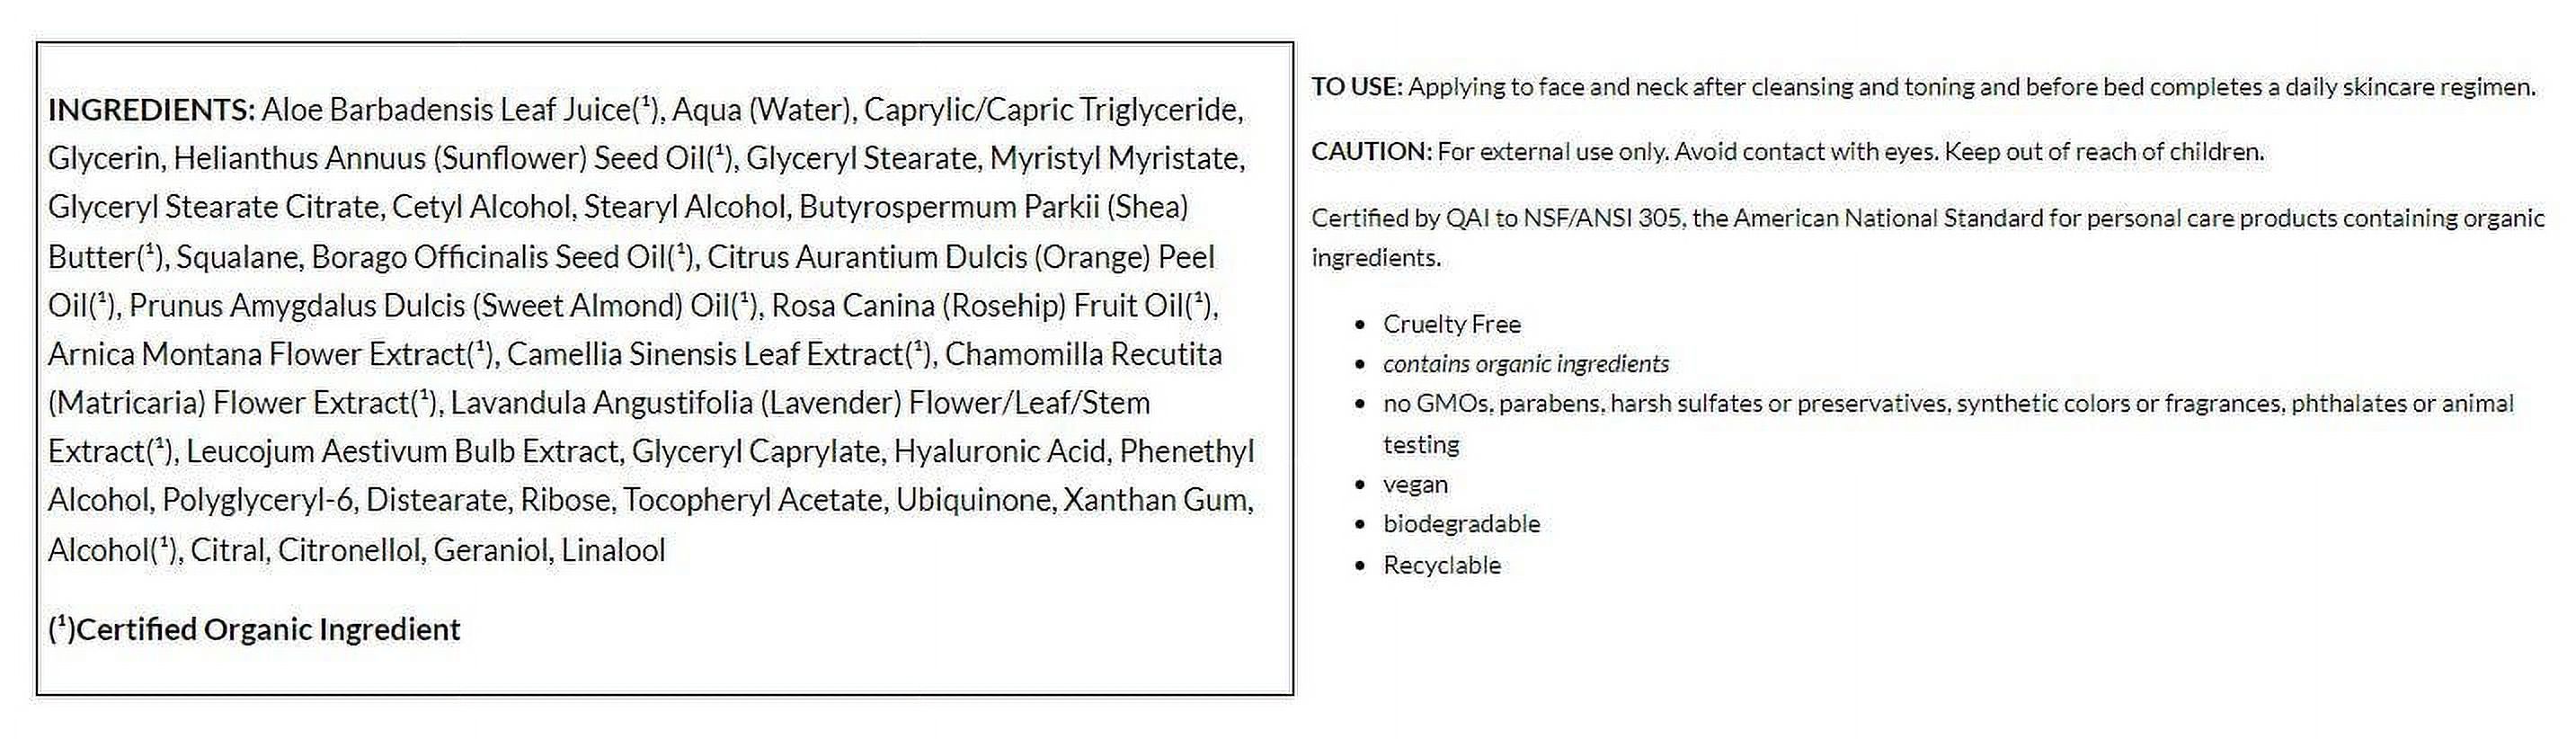 Avalon Organics Wrinkle Therapy with Coq10 & Rosehip - Night Creme 1.75 oz Cream - image 2 of 2